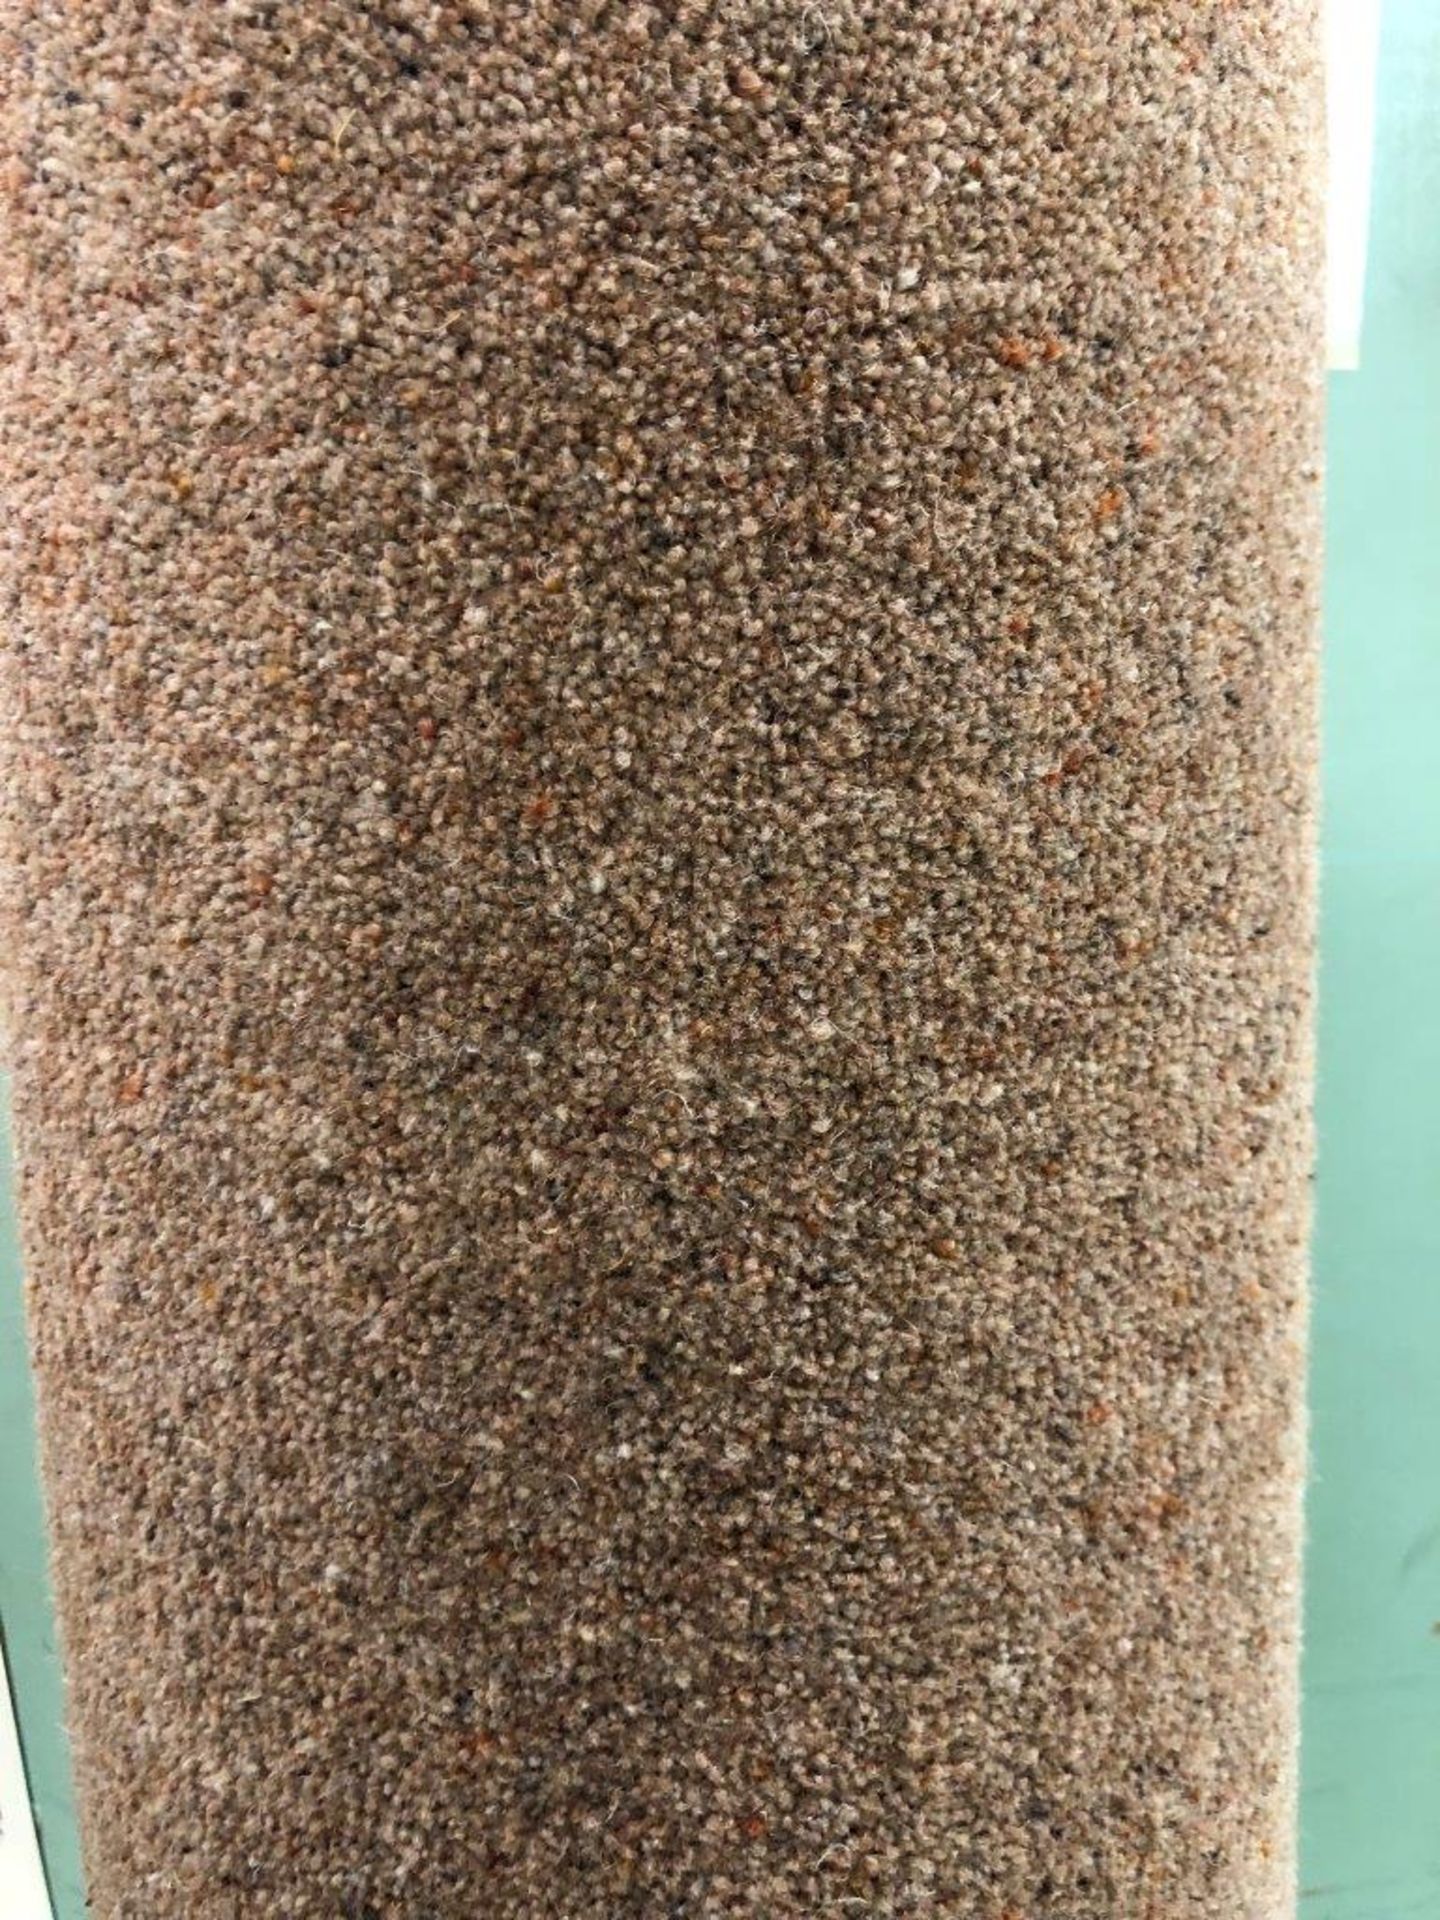 1 x Ryalux Carpet End Roll - Brown 2.9x1.9m2 - Image 3 of 3